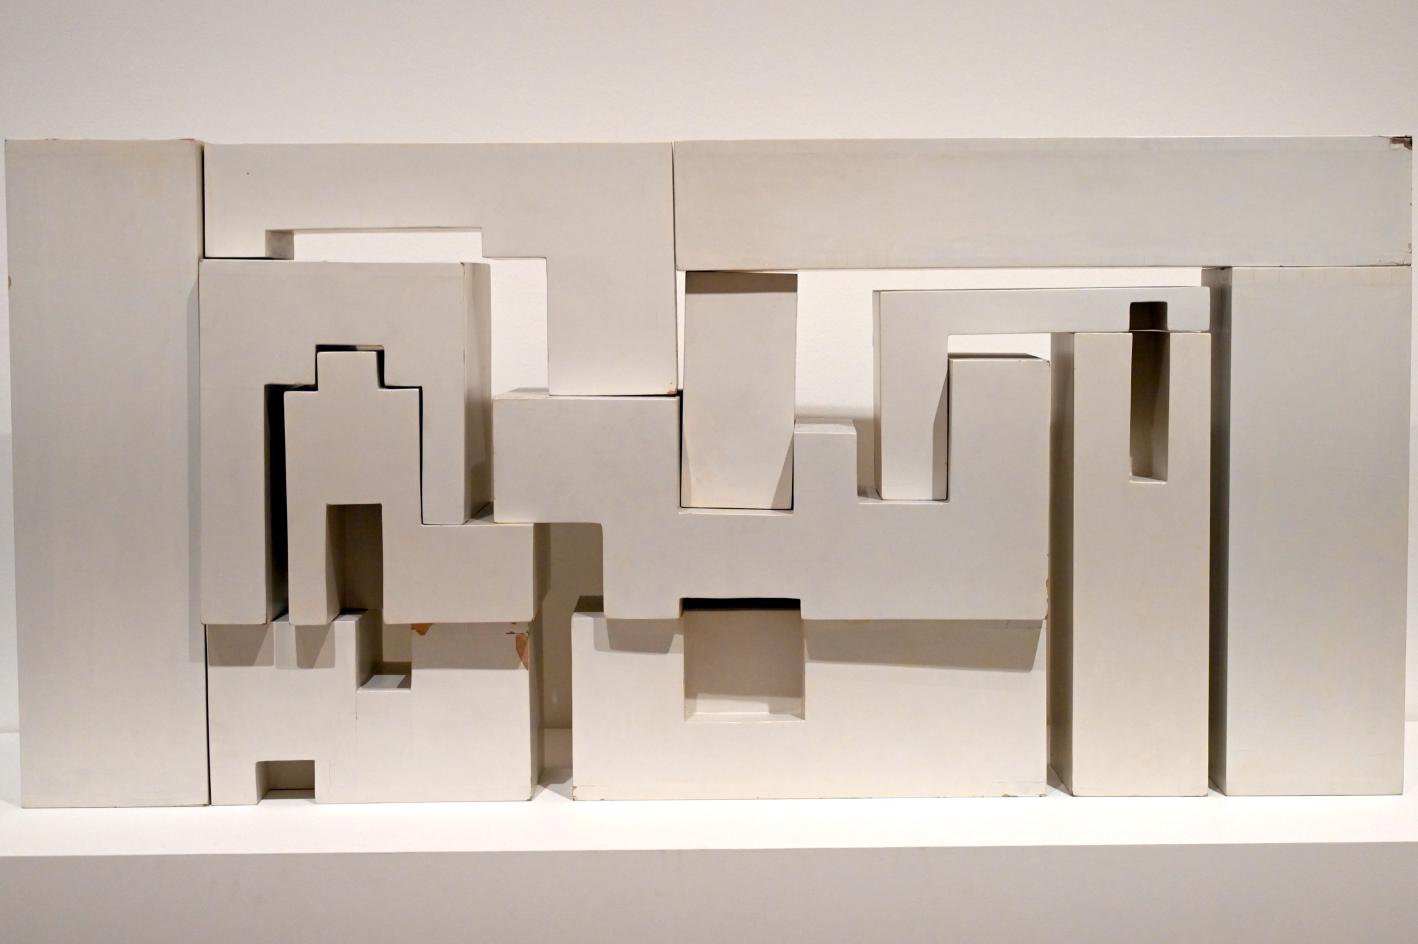 Saloua Raouda Choucair (1951–1964), Gedichtswand, London, Tate Gallery of Modern Art (Tate Modern), In the Studio 13, 1963